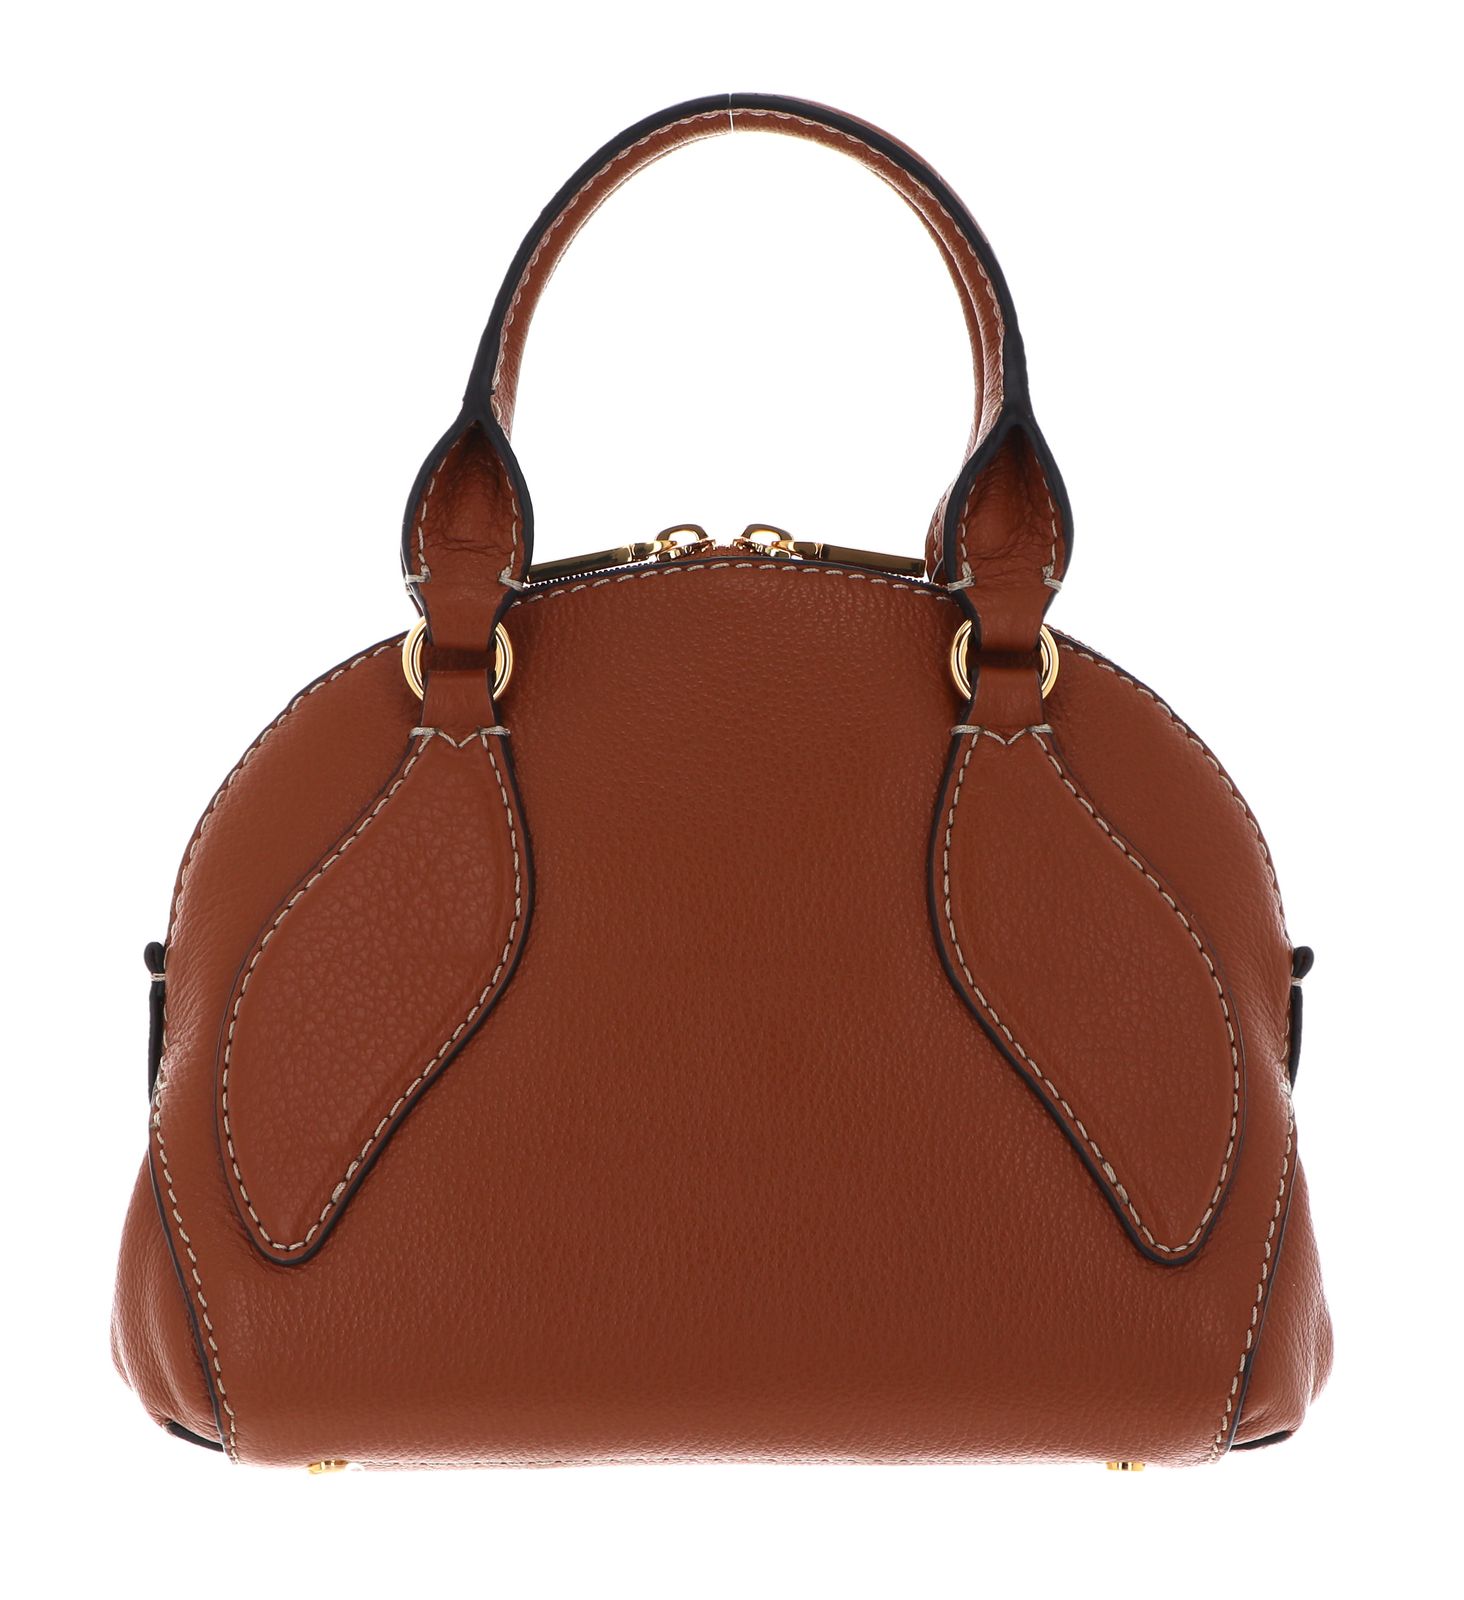 Buy Colette Handbags Online In India - Etsy India